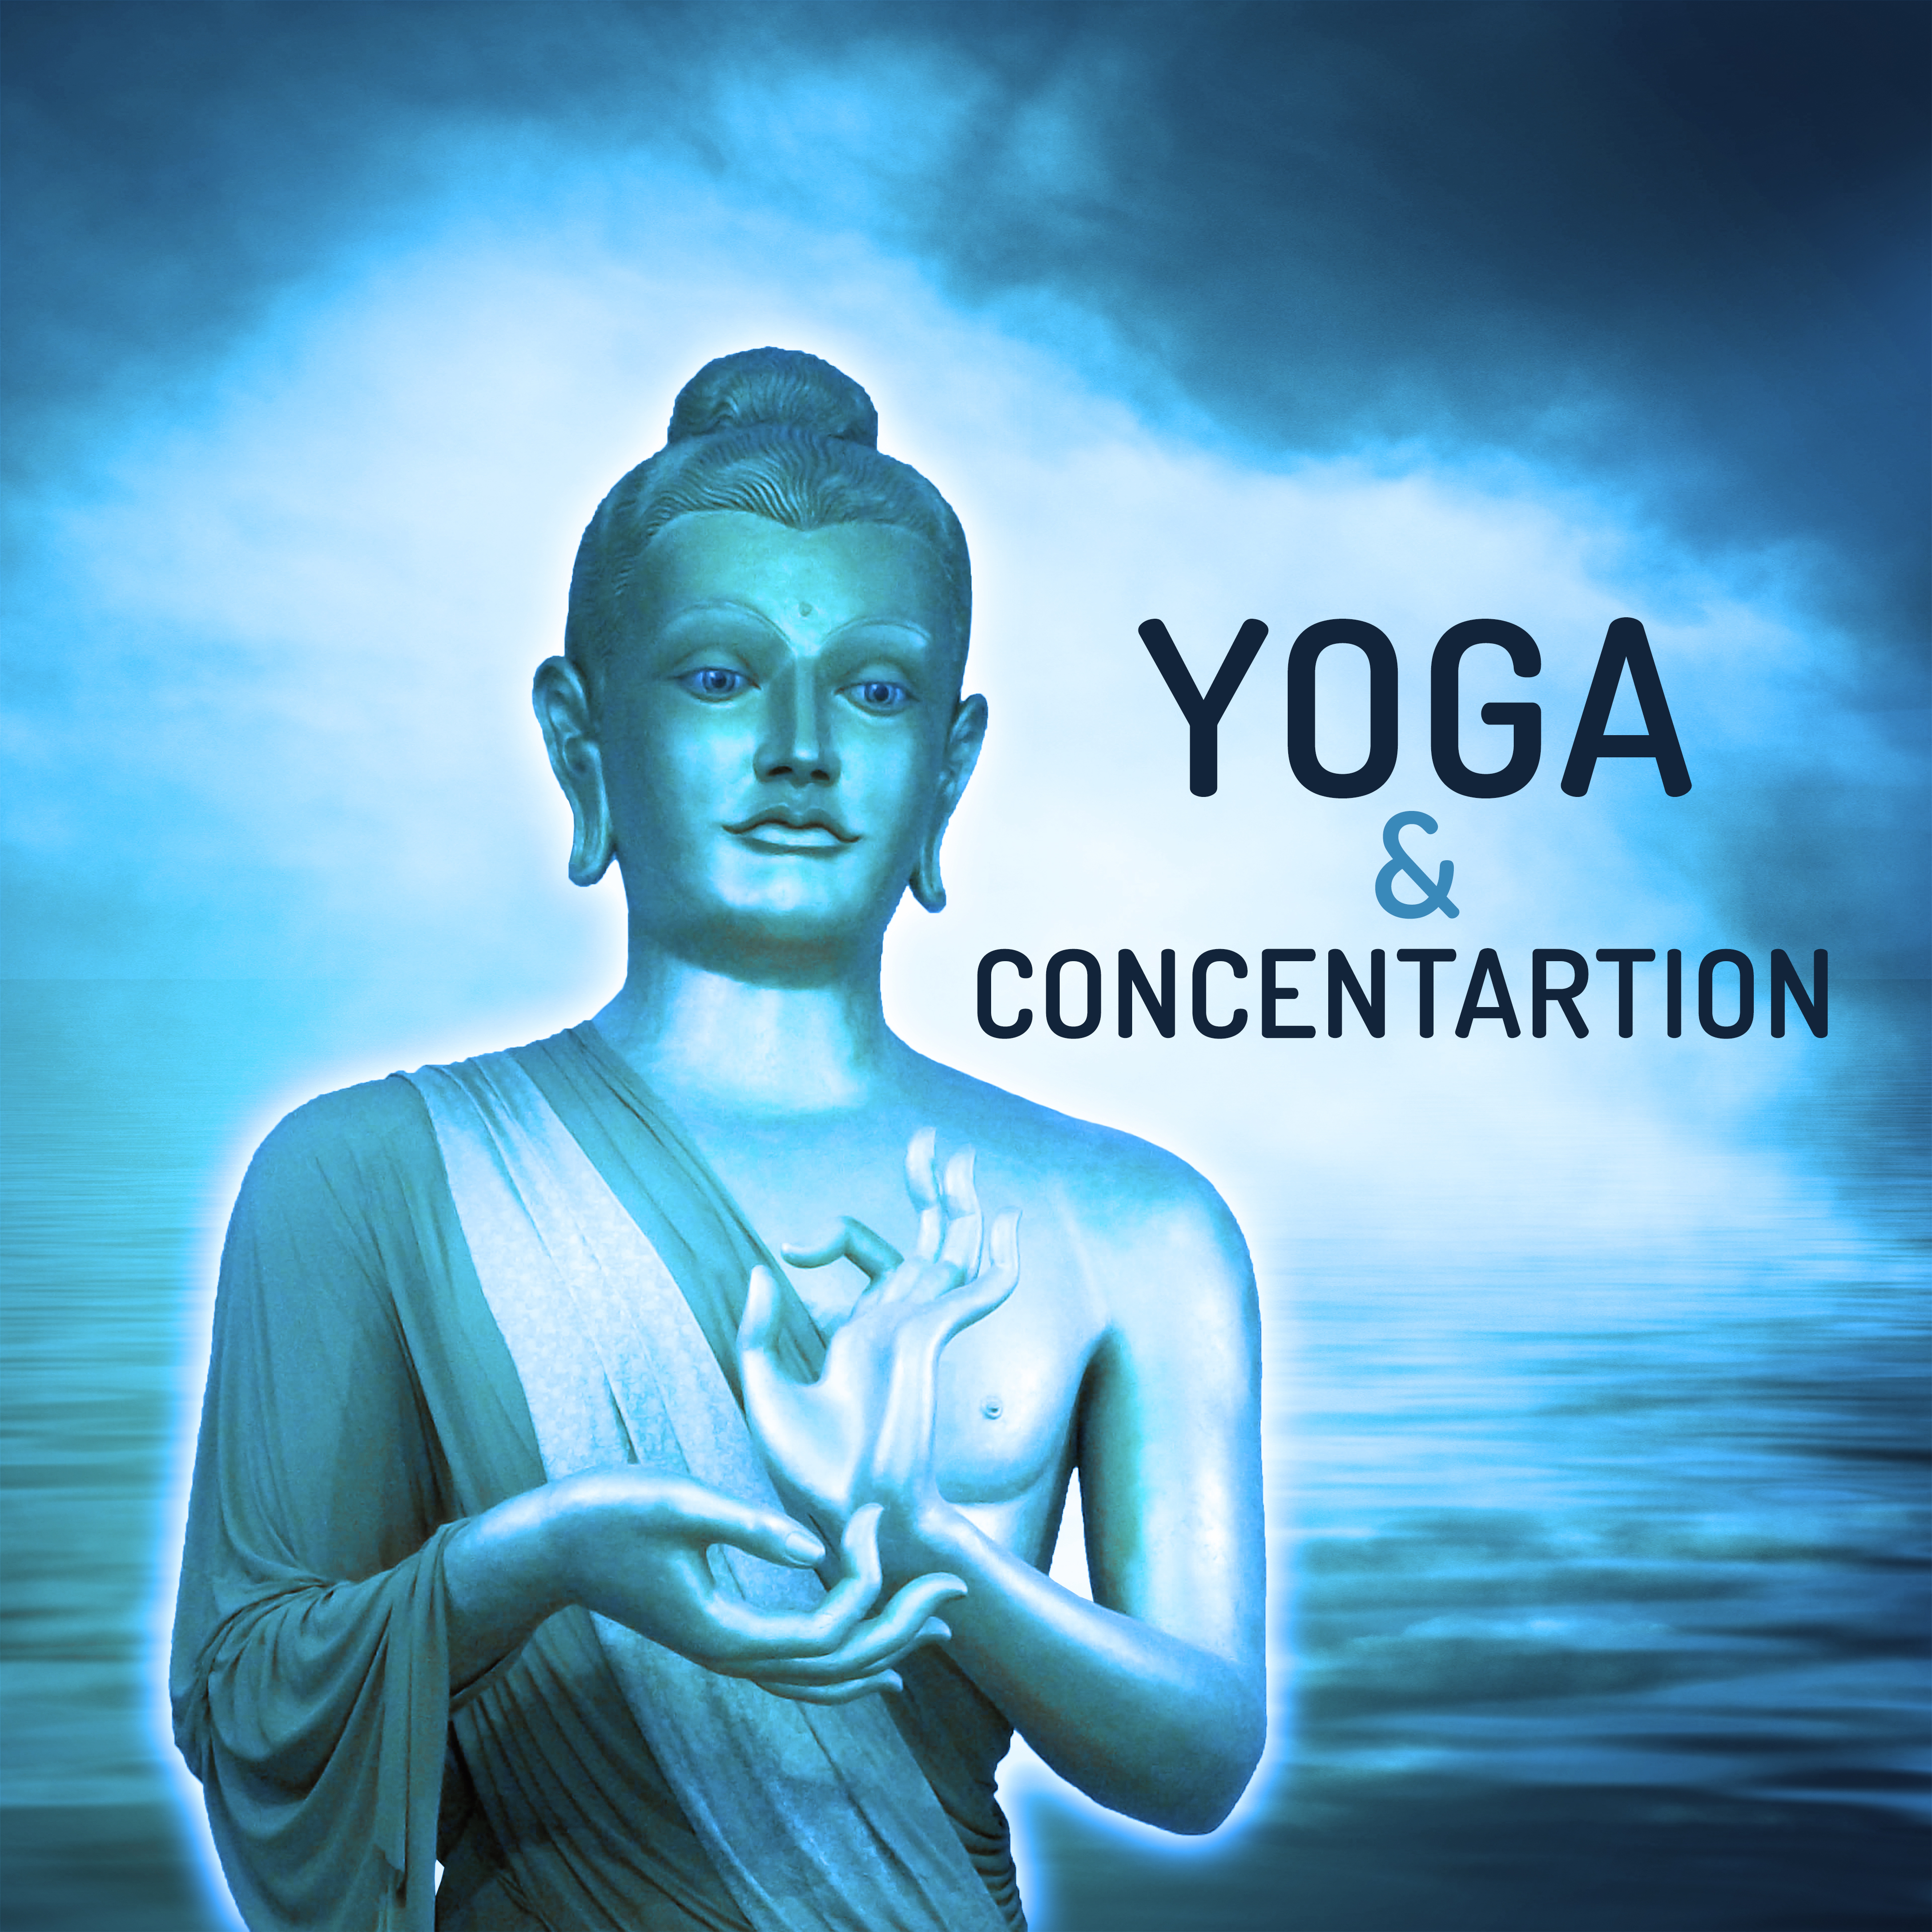 Yoga & Concentration - Music for Meditation, Relax, Zen, Sounds of Yoga, Inner Harmony, Calmness, Training Yoga